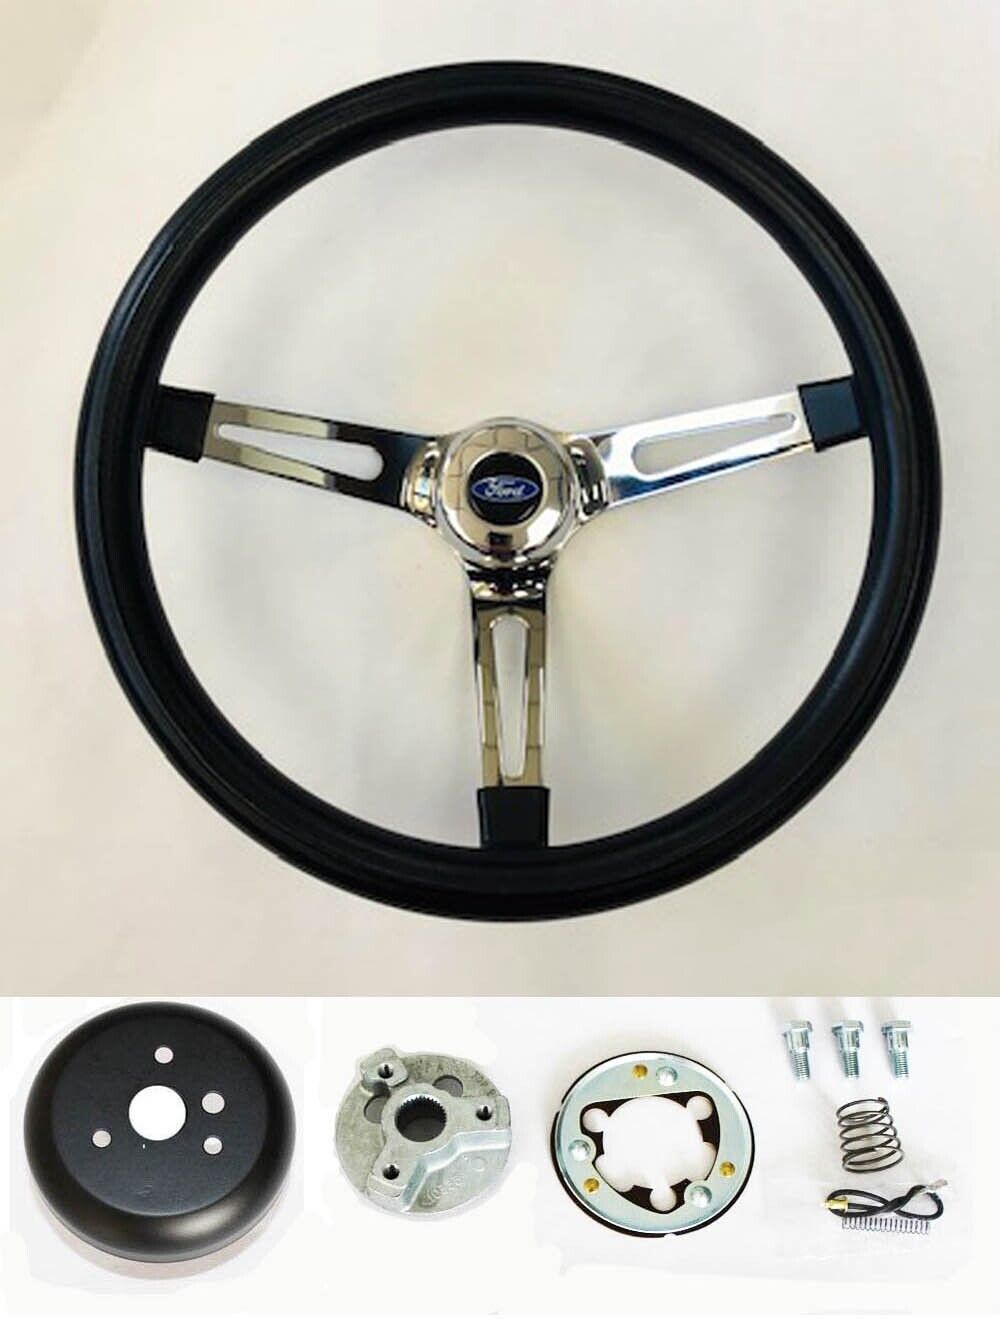 Falcon Thunderbird Galaxie  LTD Steering Wheel Black on Chrome Spokes 13 1/2